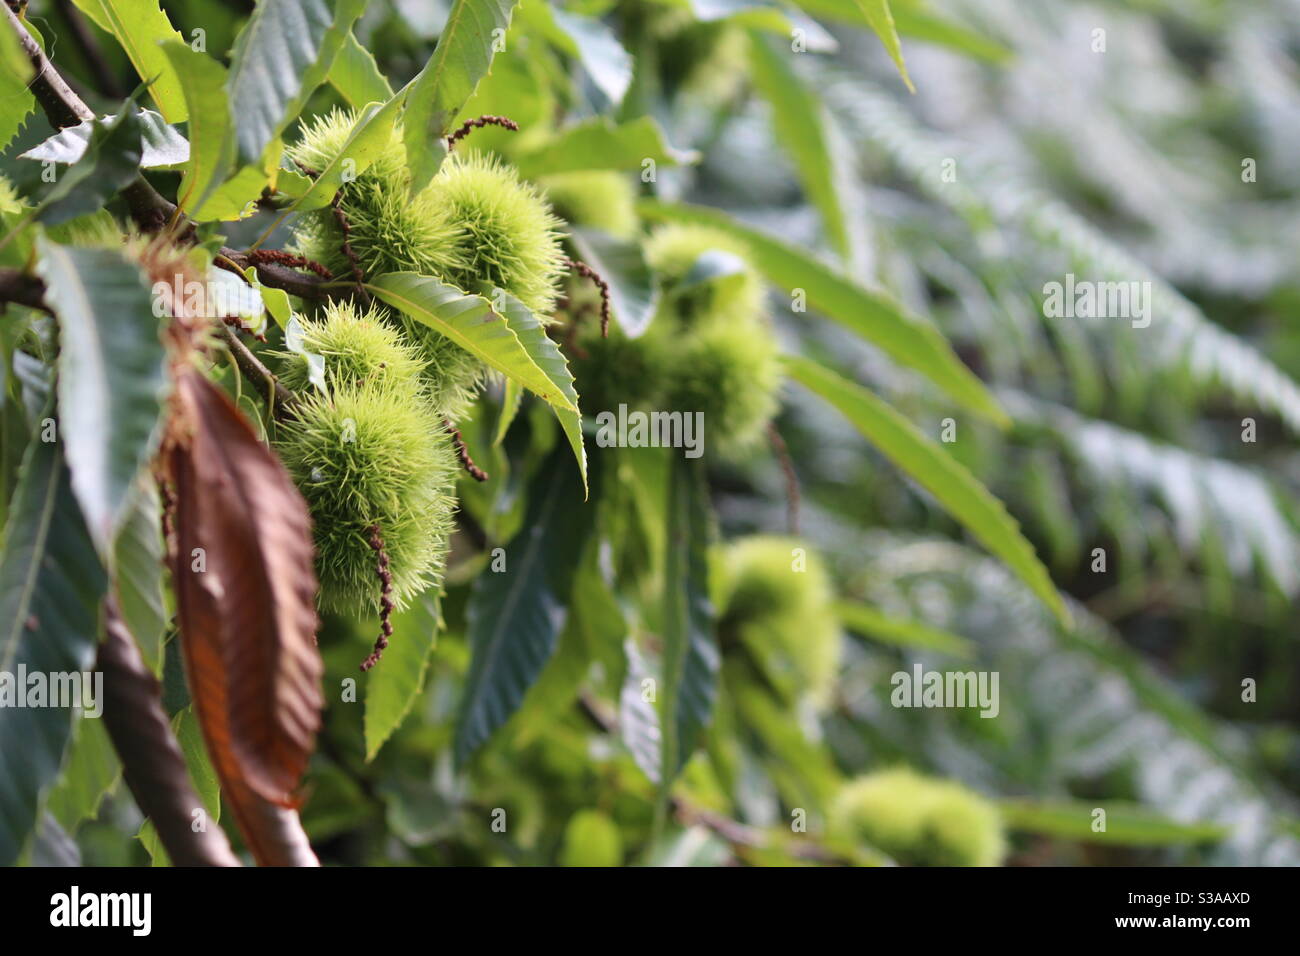 Horse chestnut (Aesculus hippocastanum) seed cases at RSPB Arne Stock Photo